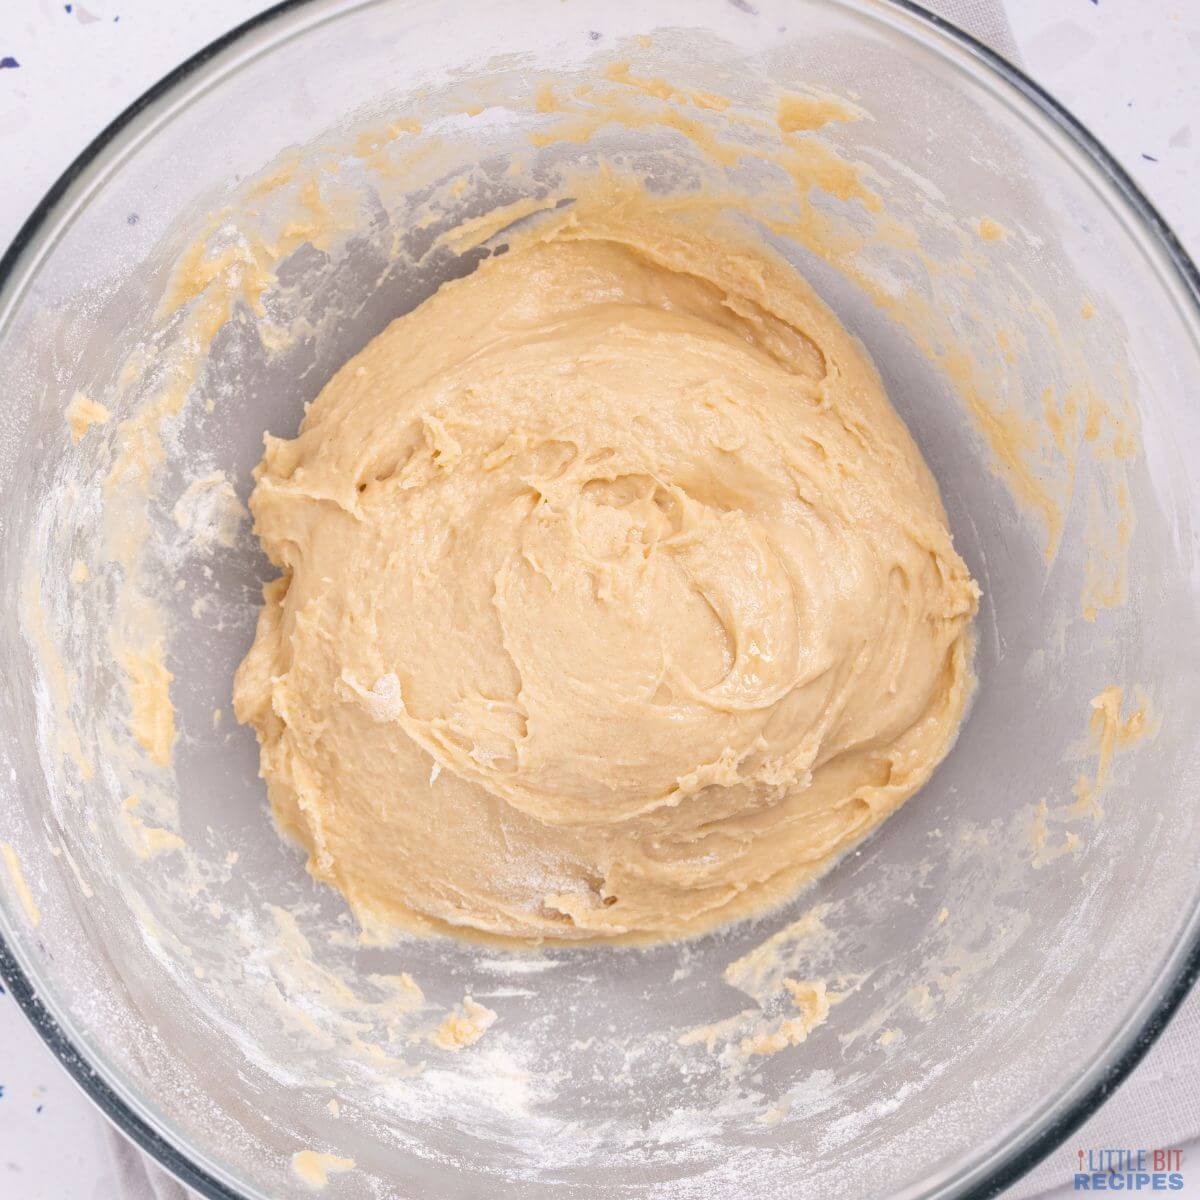 yeast dough in mixing bowl.